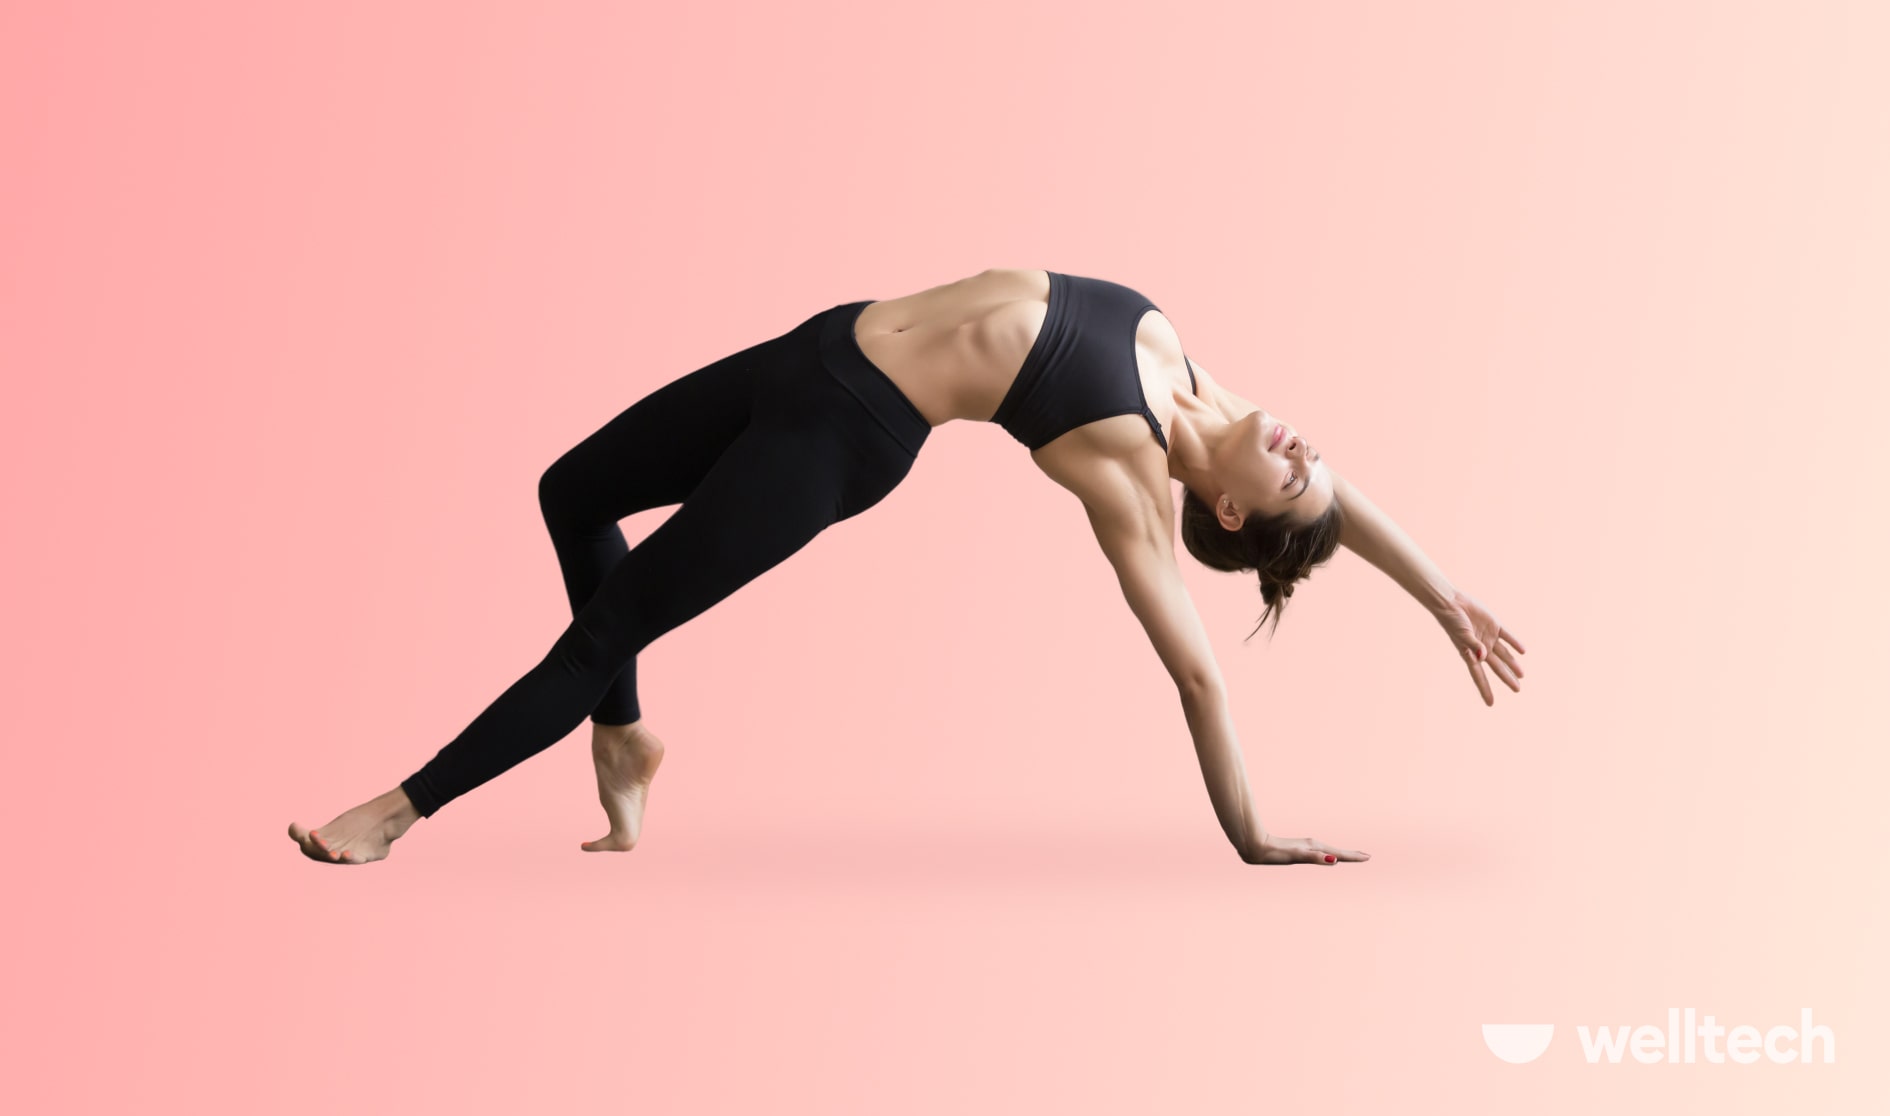 Astha Yoga - Yoga Poses To Help You Learn Arm Balances